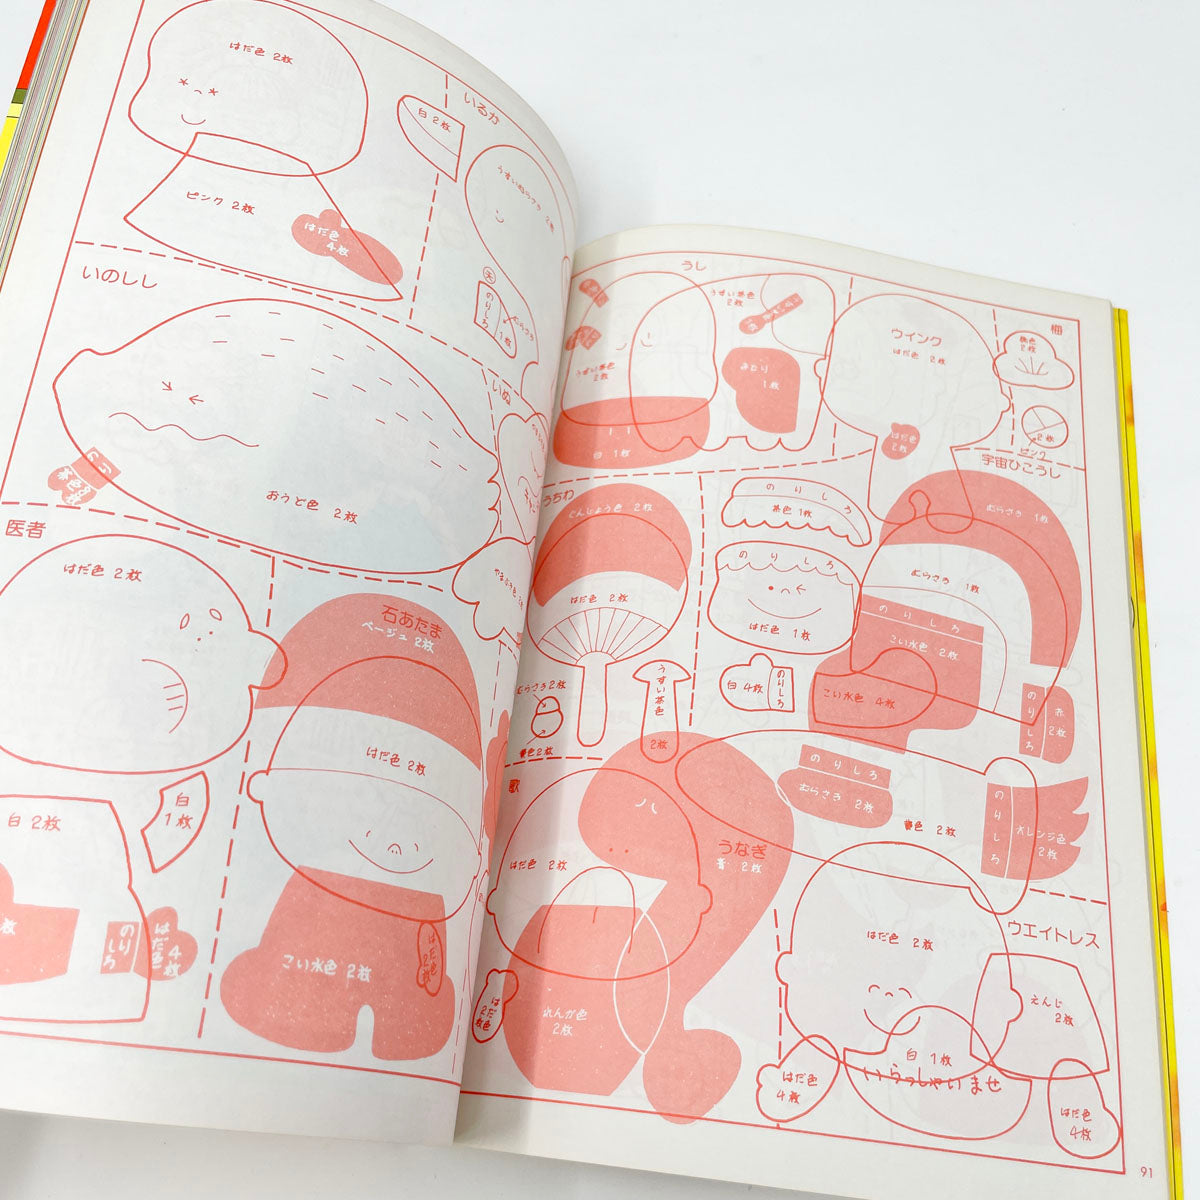 Ondori Doll Pattern Book "Mascots" by Terumi Otaka